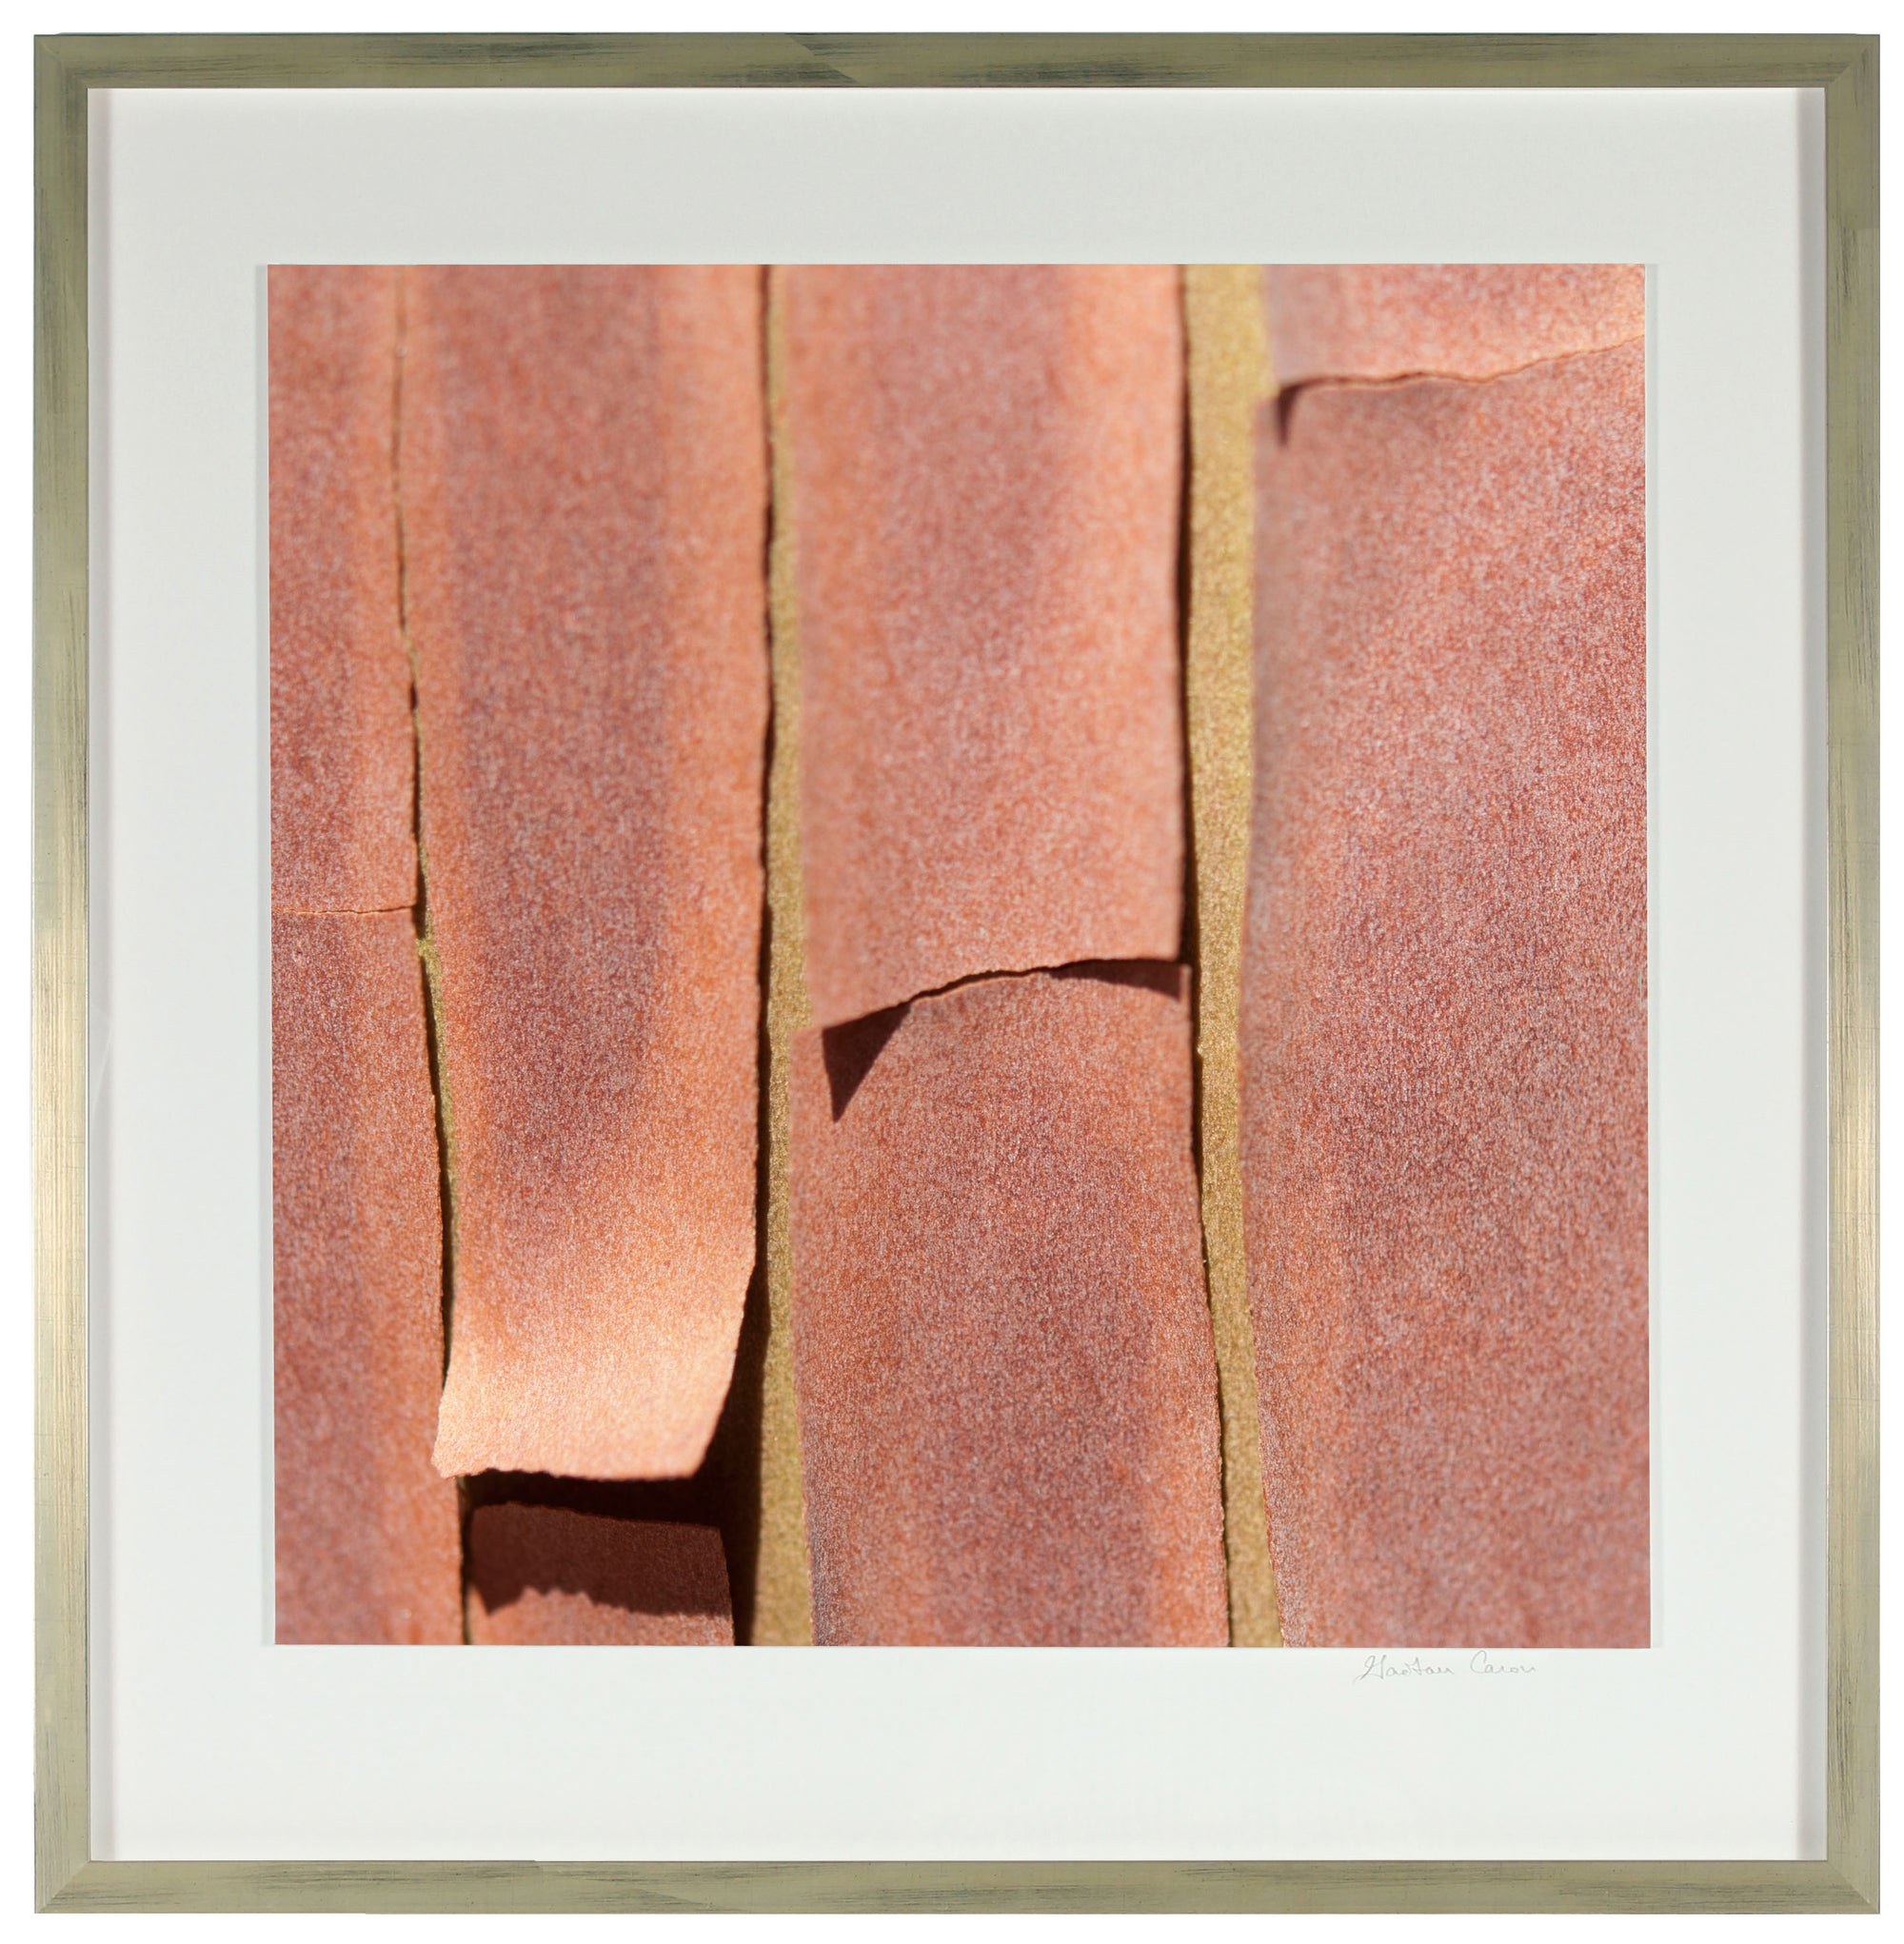 <I>Texture 5: Madrone Bark</I><br>Mendocino, California, 2014<br><br>GC0376